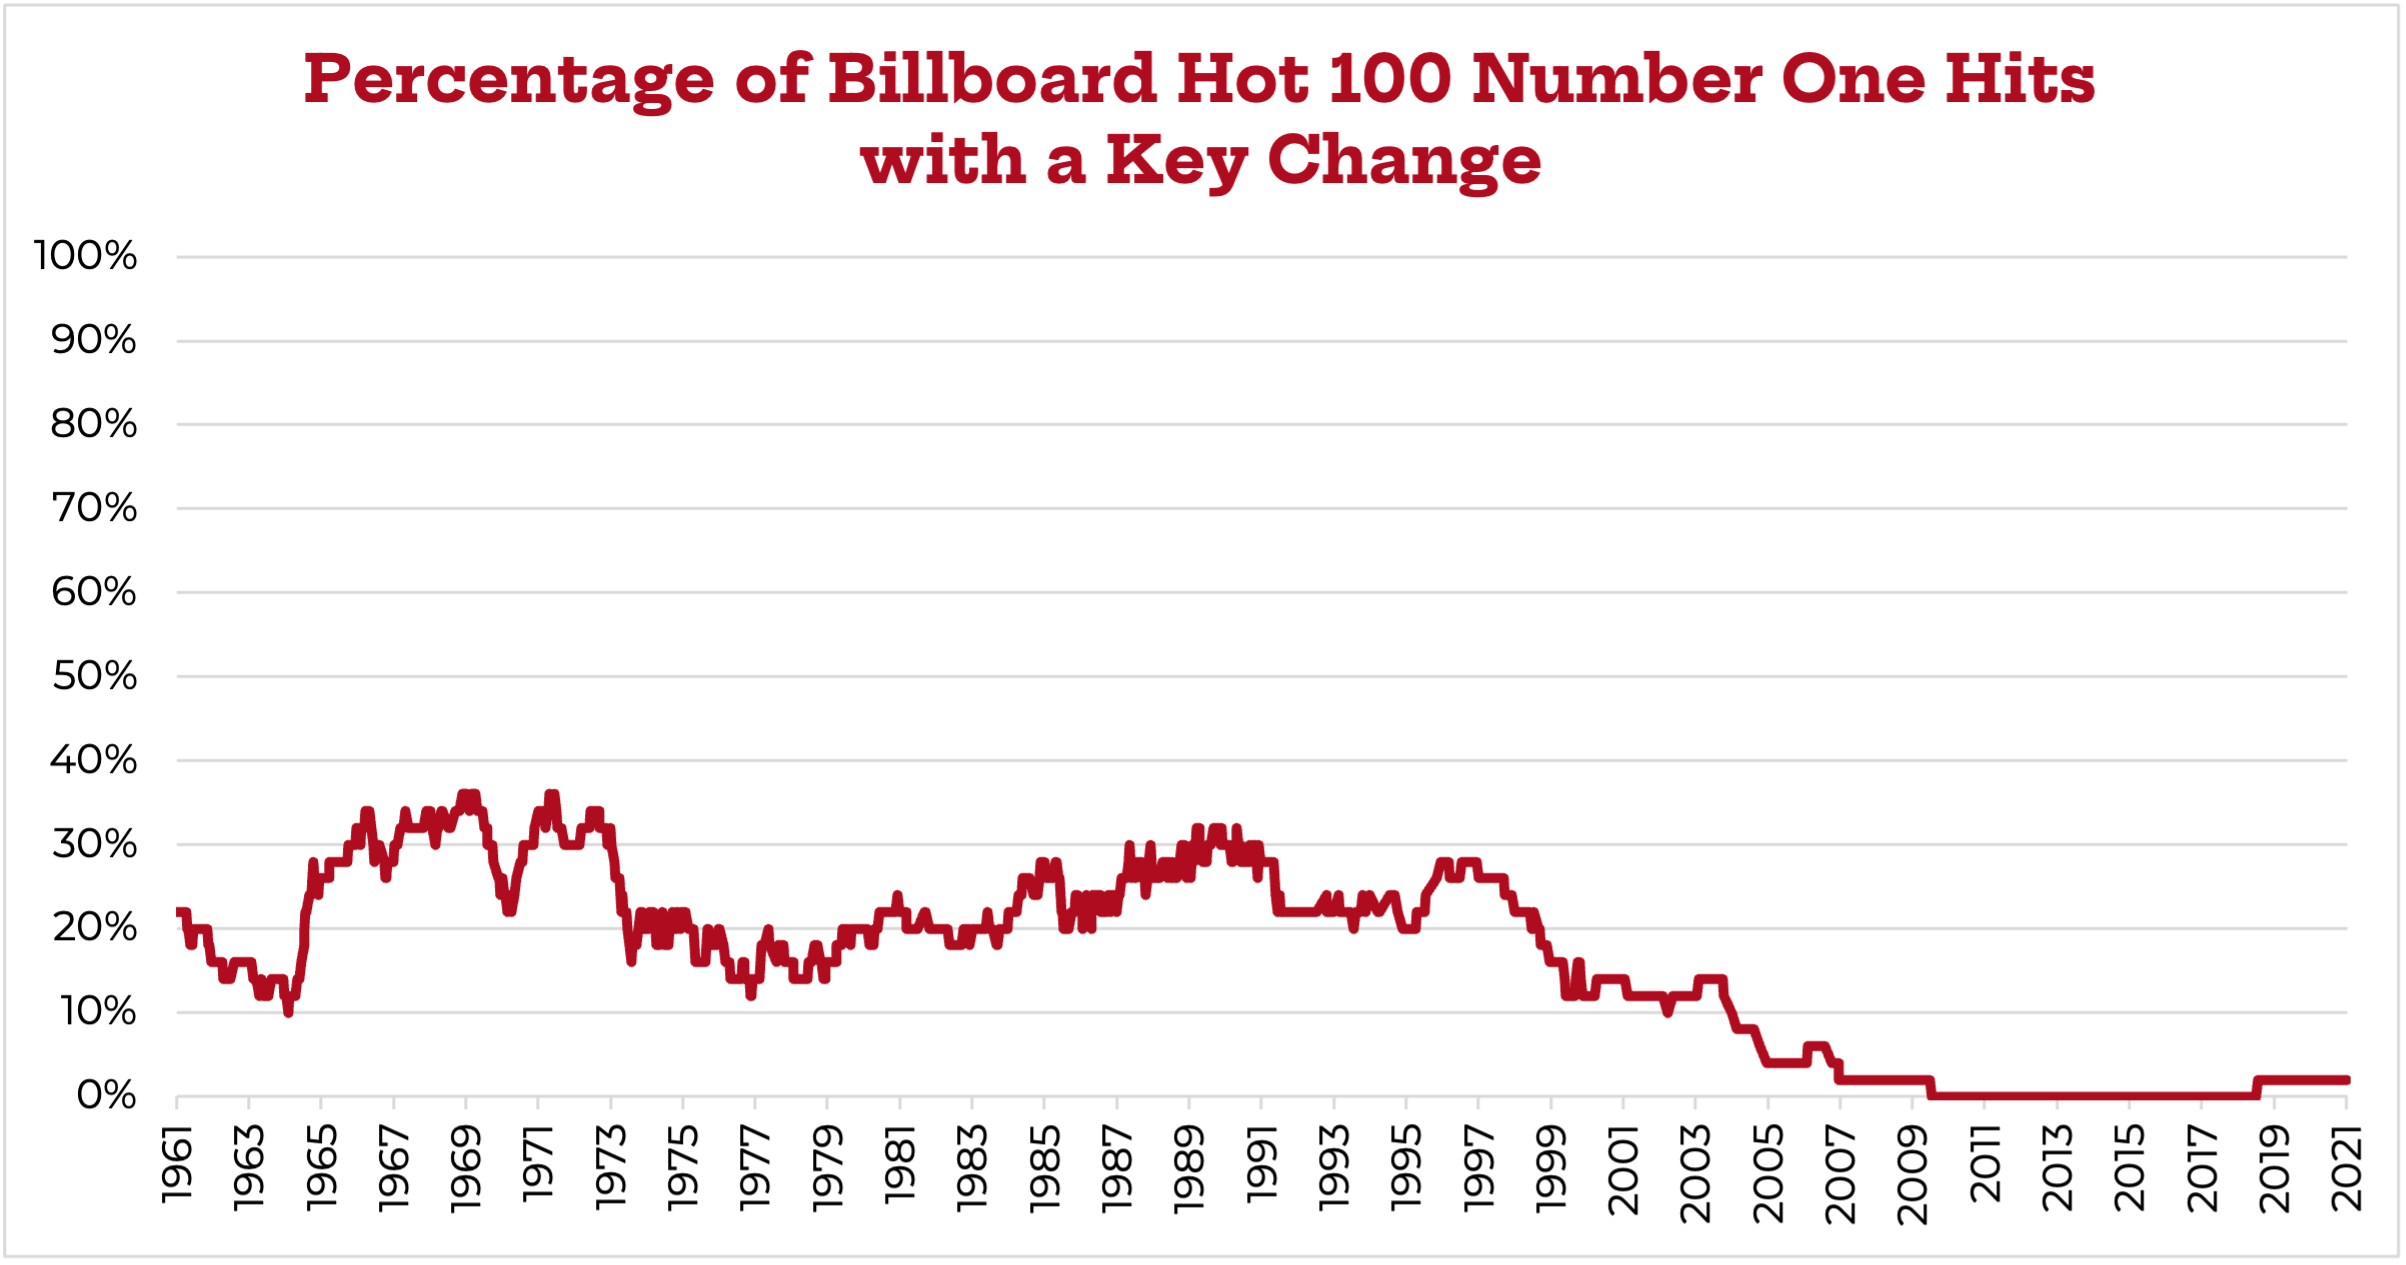 How the Billboard 100 Lost the Key Change